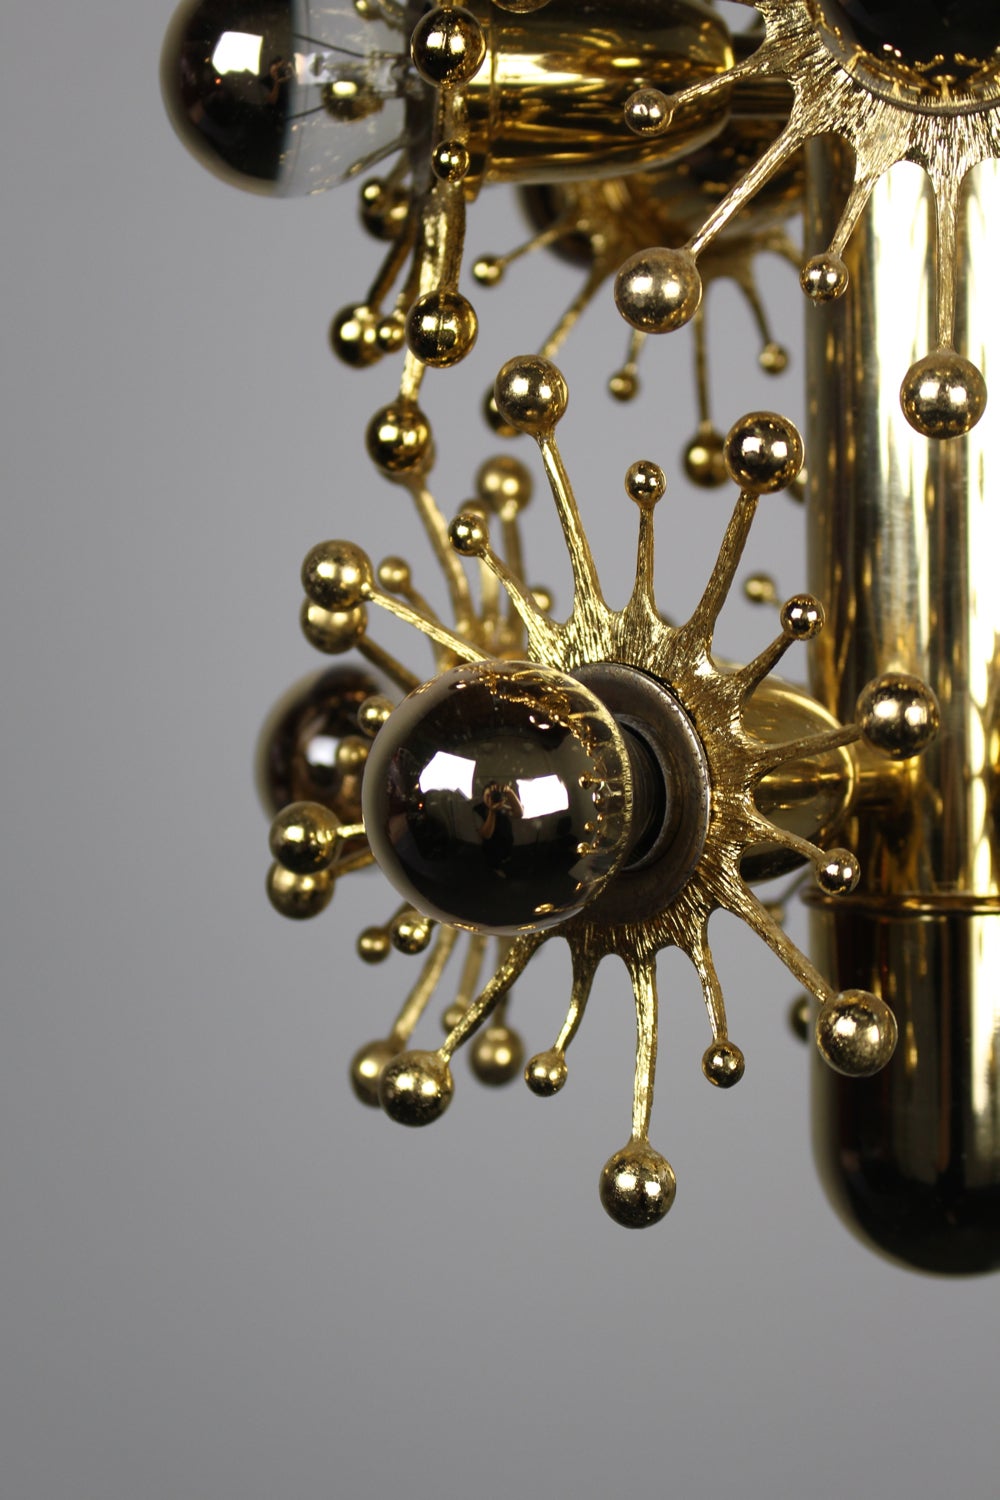 Mid-Century Modern Midcentury Gold Sputnik Style Pendant Light with Mirrored Bulbs